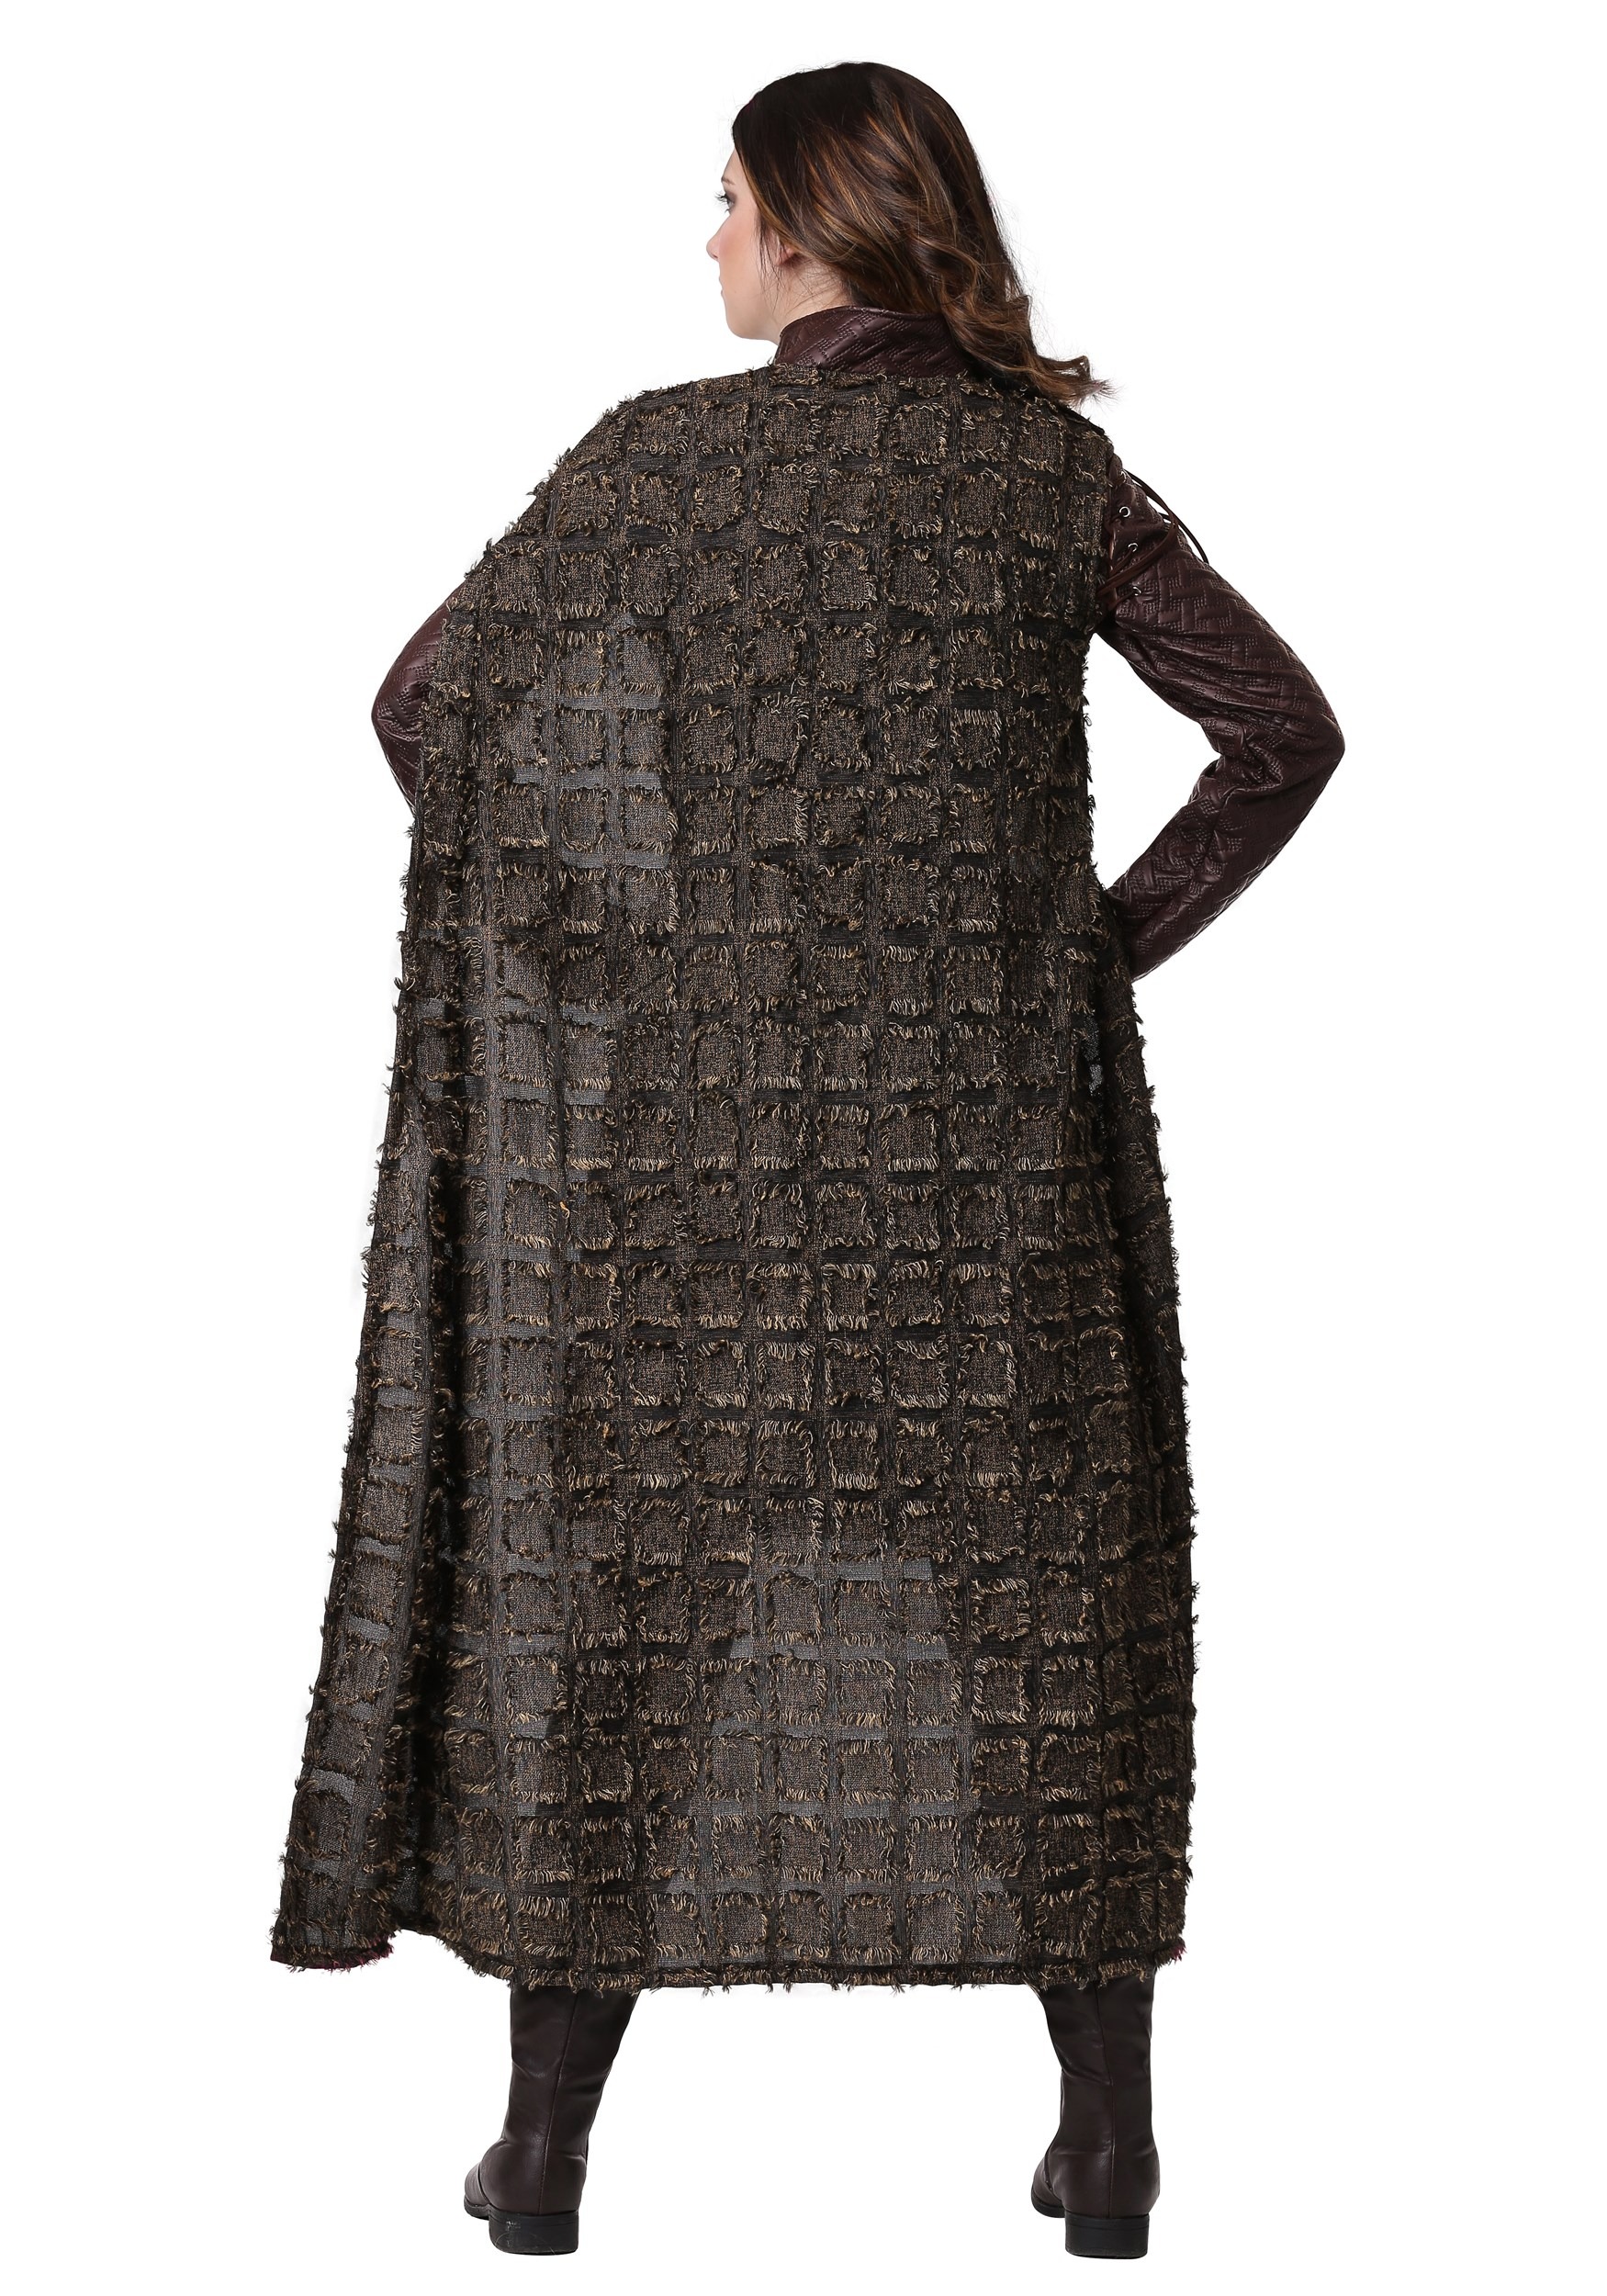 Plus Size Winter Warrior Costume For Women's